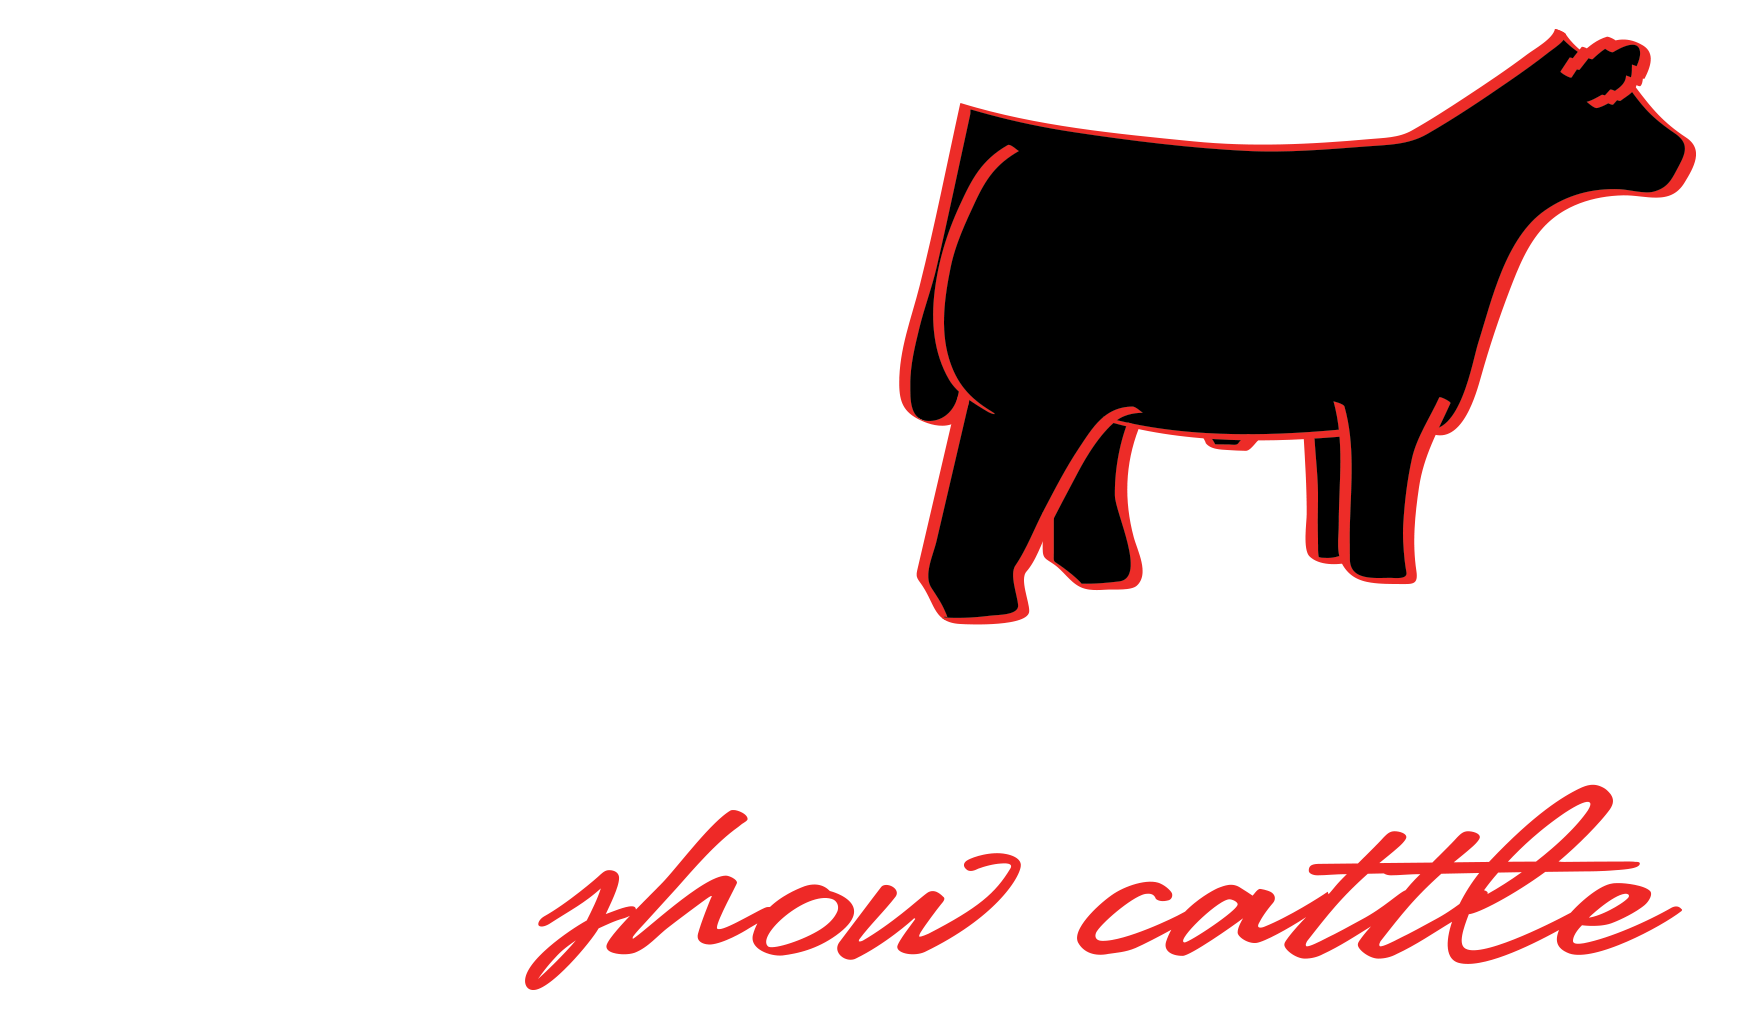 cows clipart logo